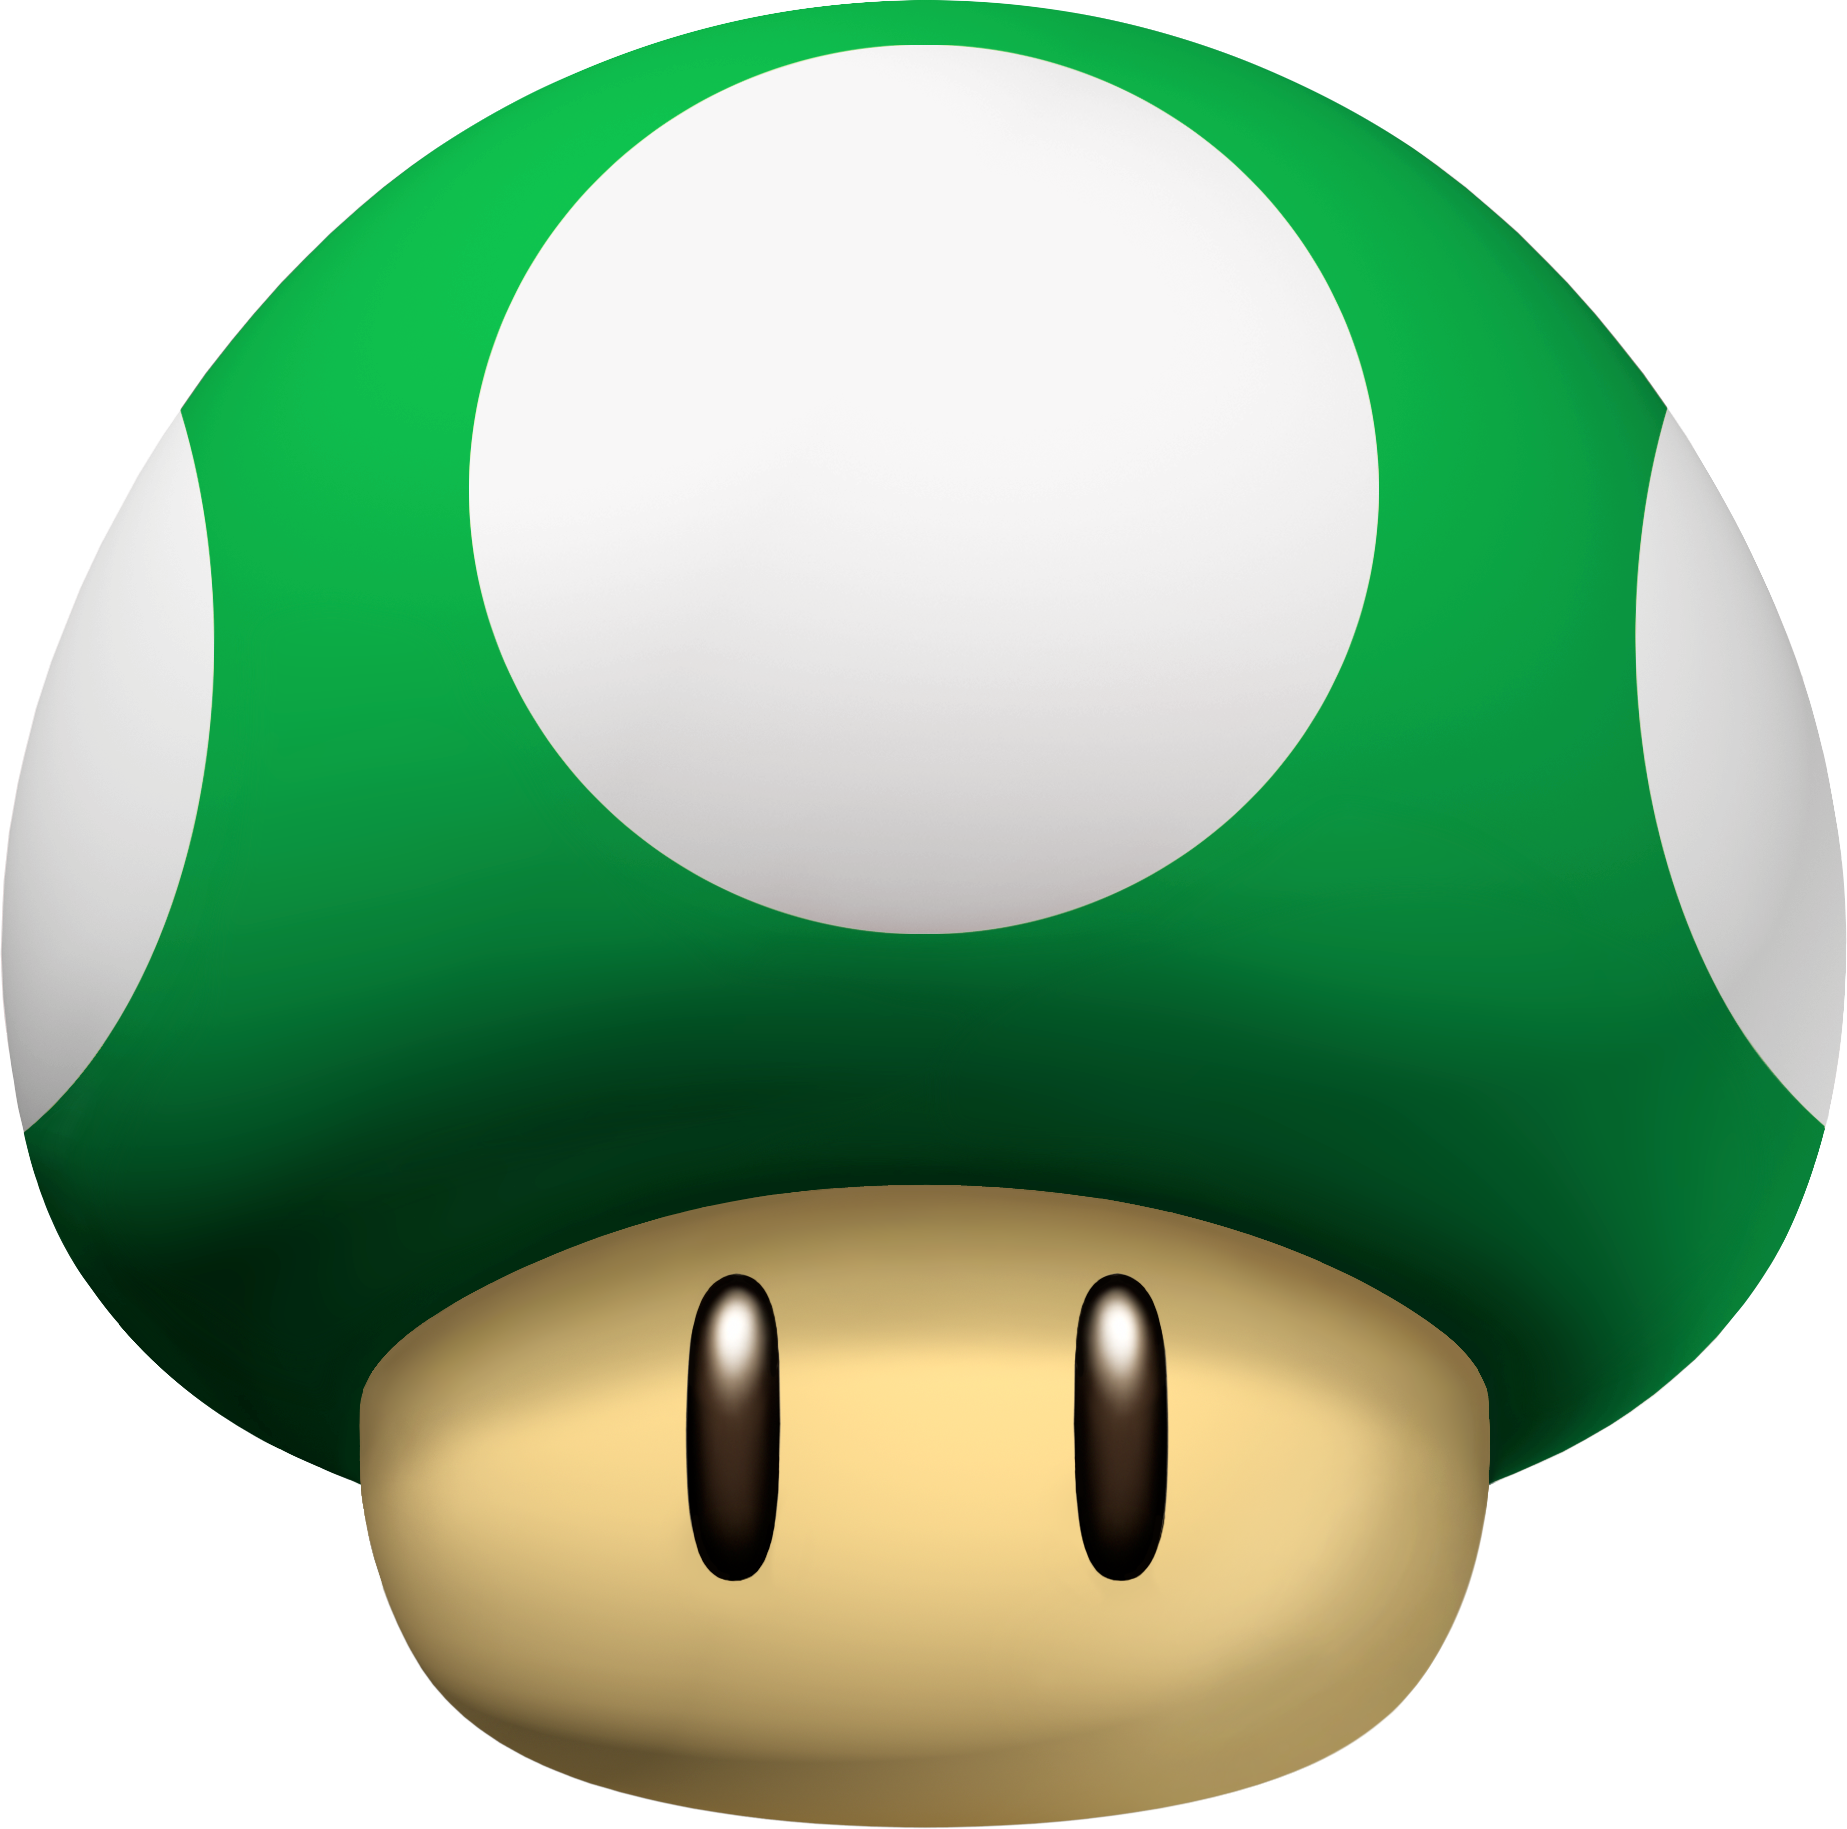 Filensmbds 1 Up Mushroom Artworkpng Super Mario Wiki The Mario Encyclopedia 7709